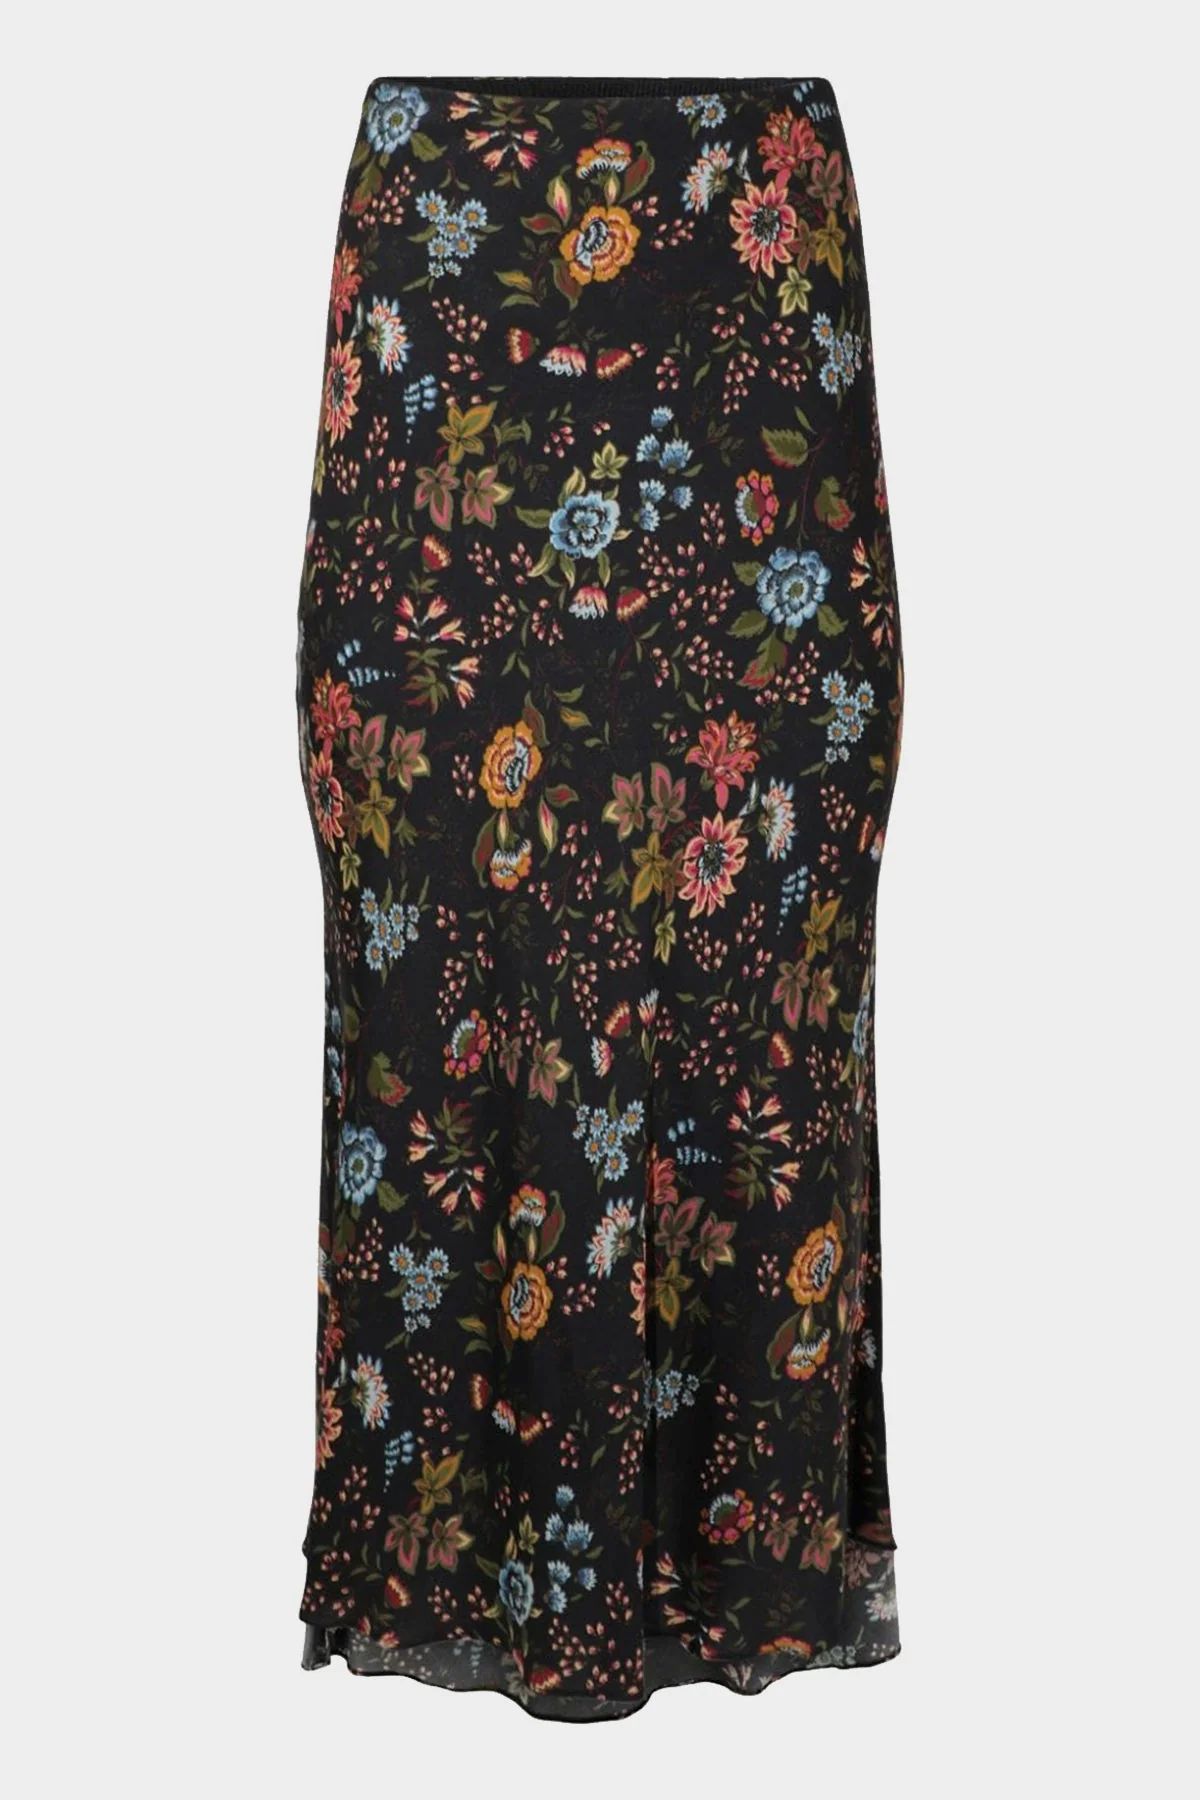 Clover Skirt in Black Multi | Shop Olivia